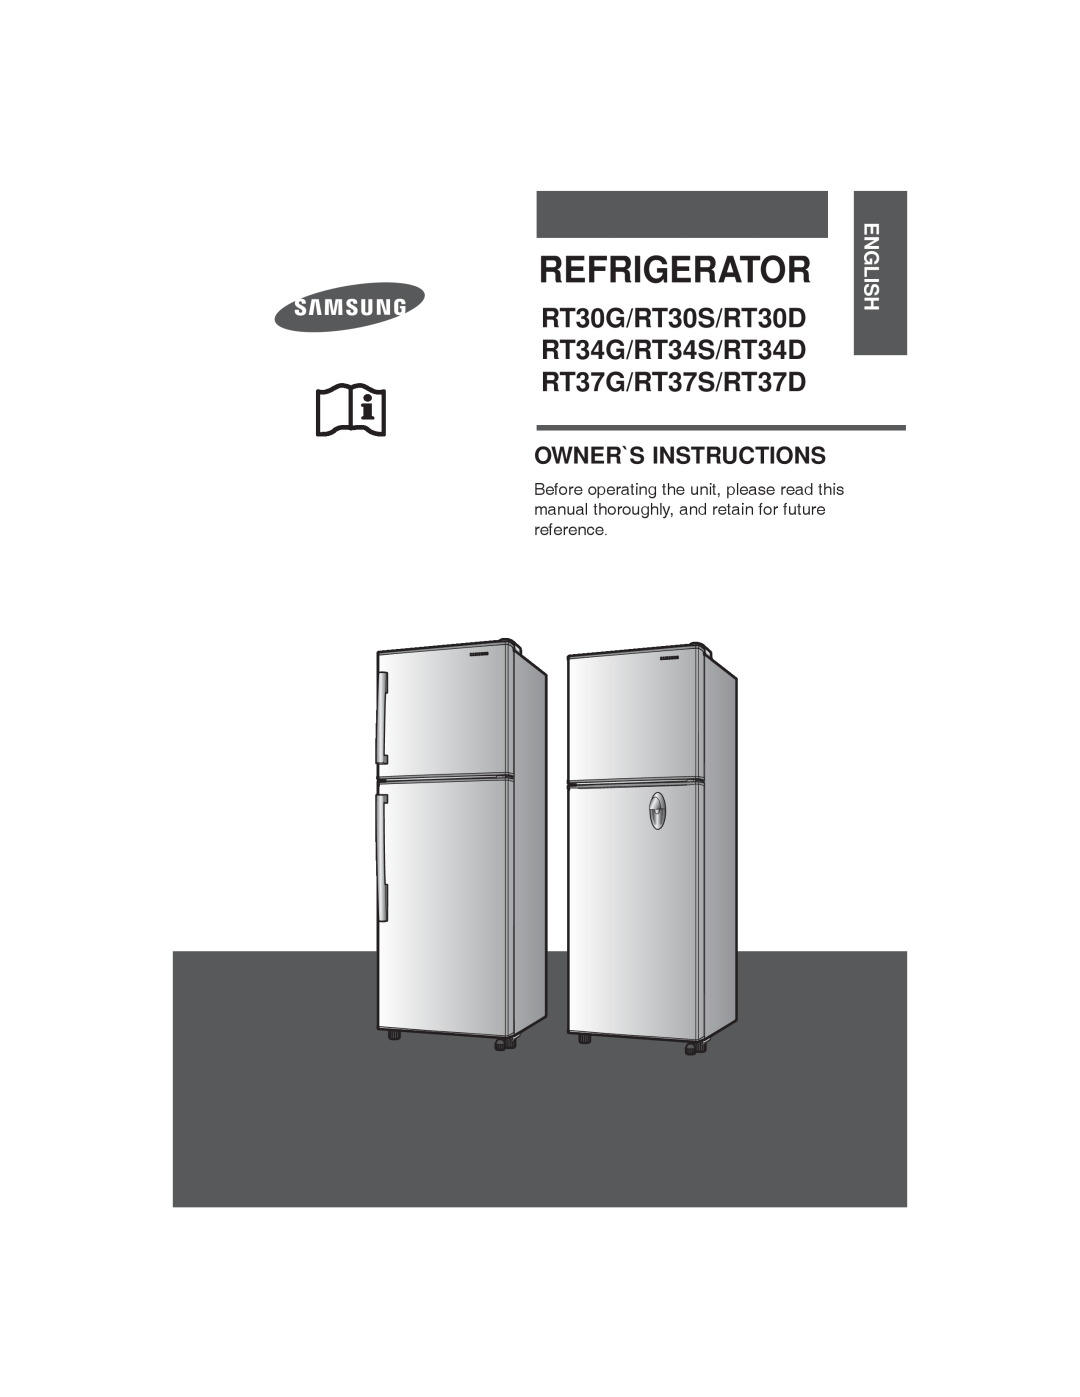 Samsung manual English, Refrigerator, RT30G/RT30S/RT30D RT34G/RT34S/RT34D RT37G/RT37S/RT37D, Owner`S Instructions 